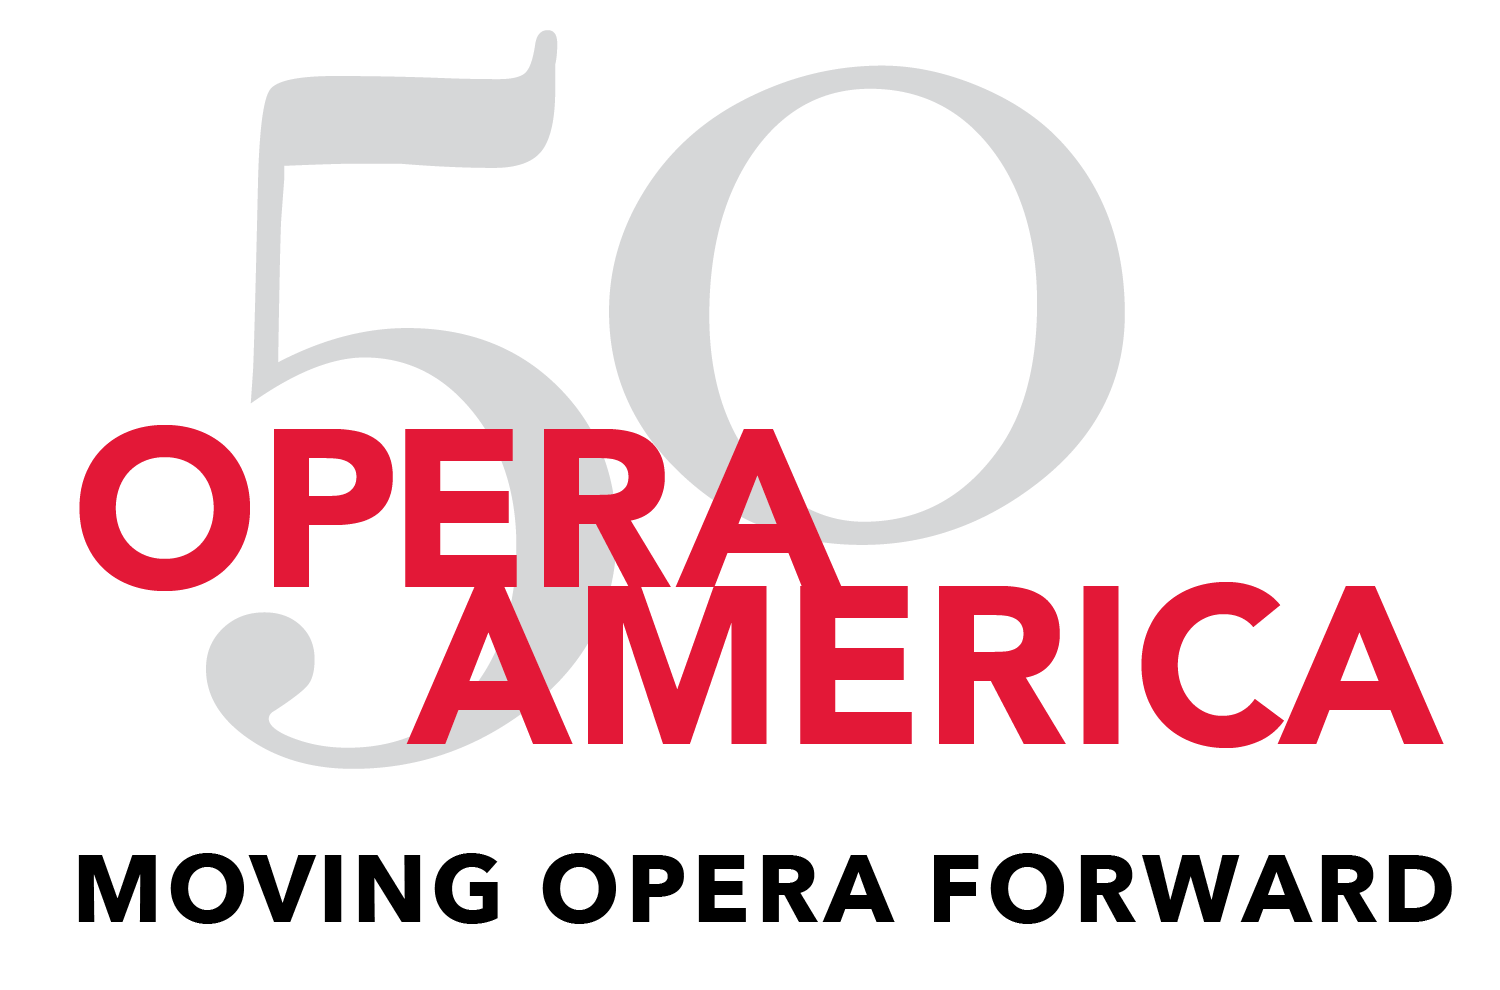 Opera America - Moving Opera Forward